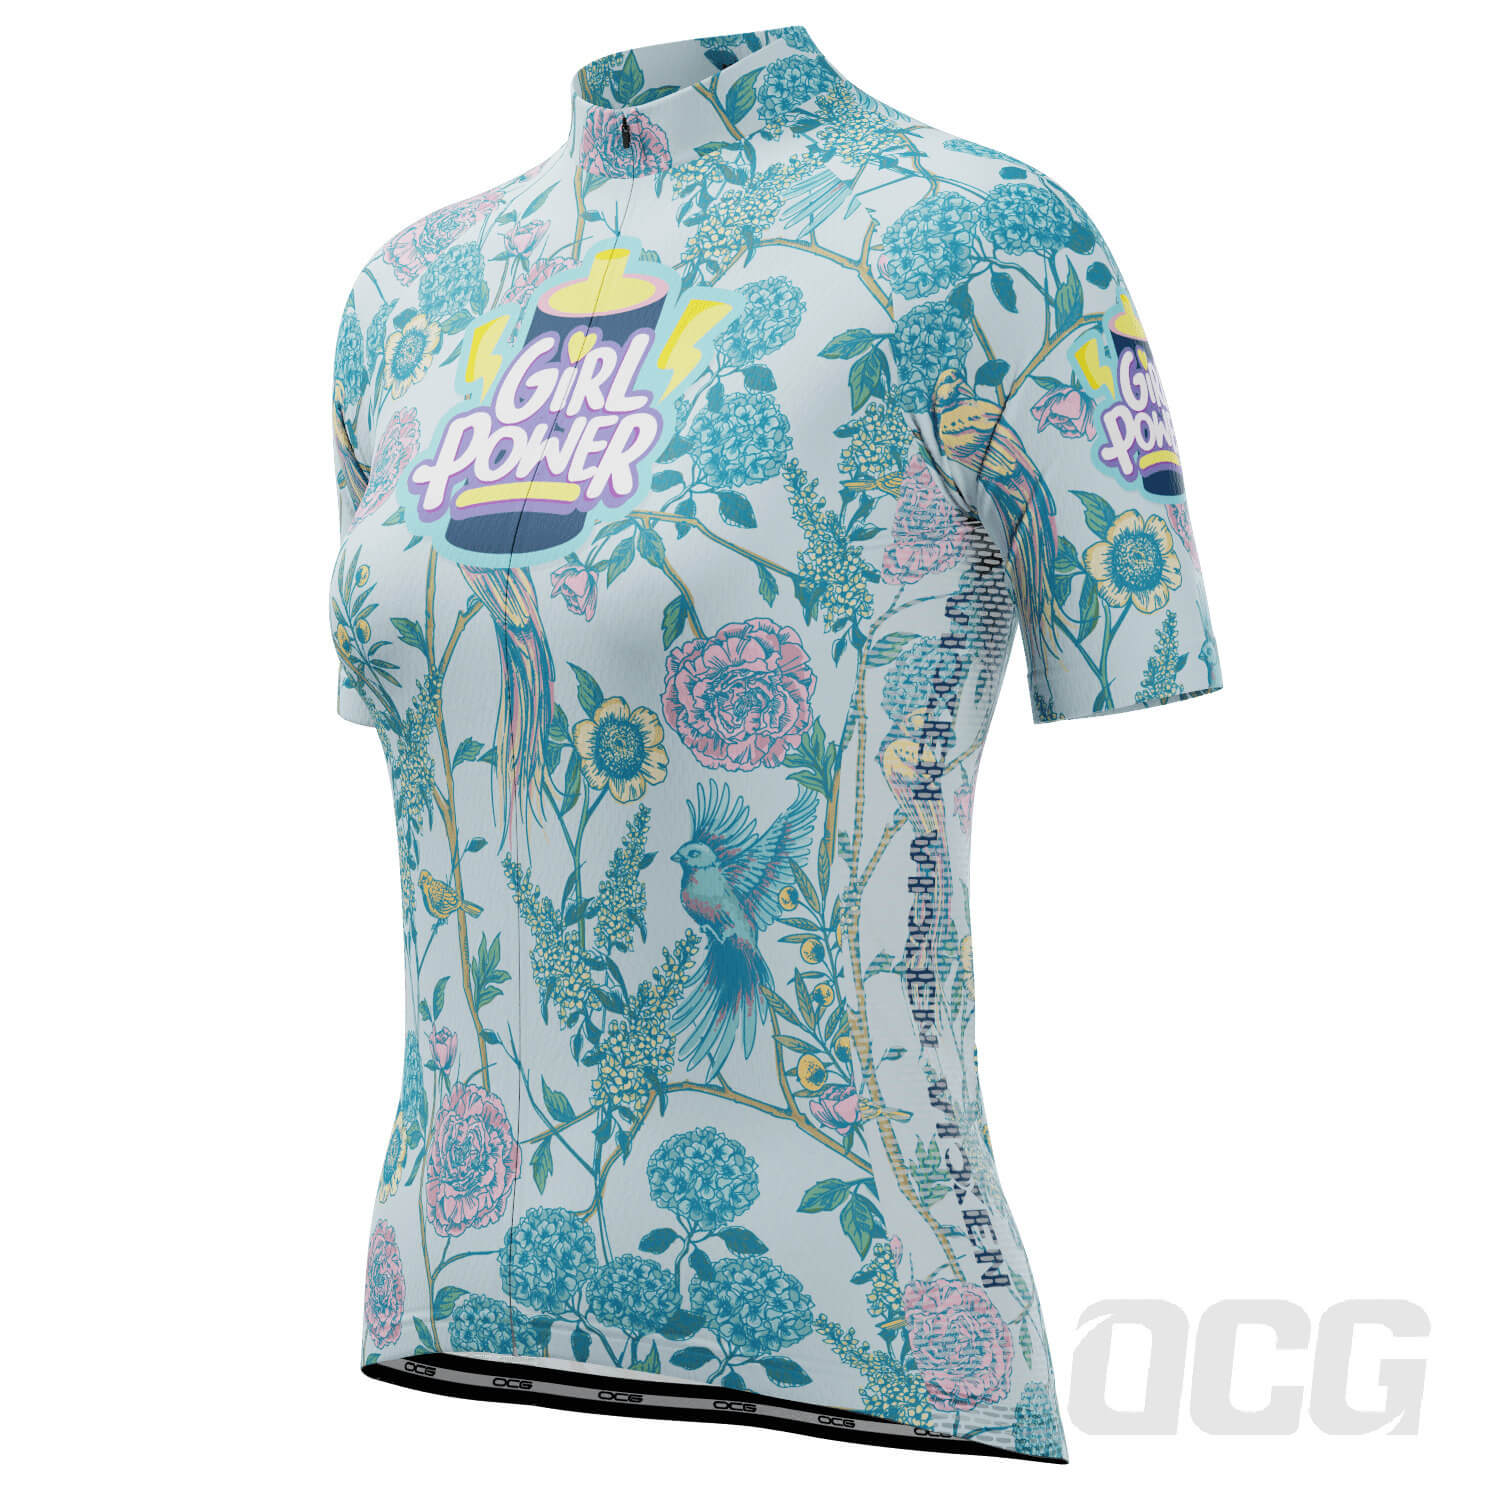 Women's Girl Power Series 2 Short Sleeve Cycling Jersey